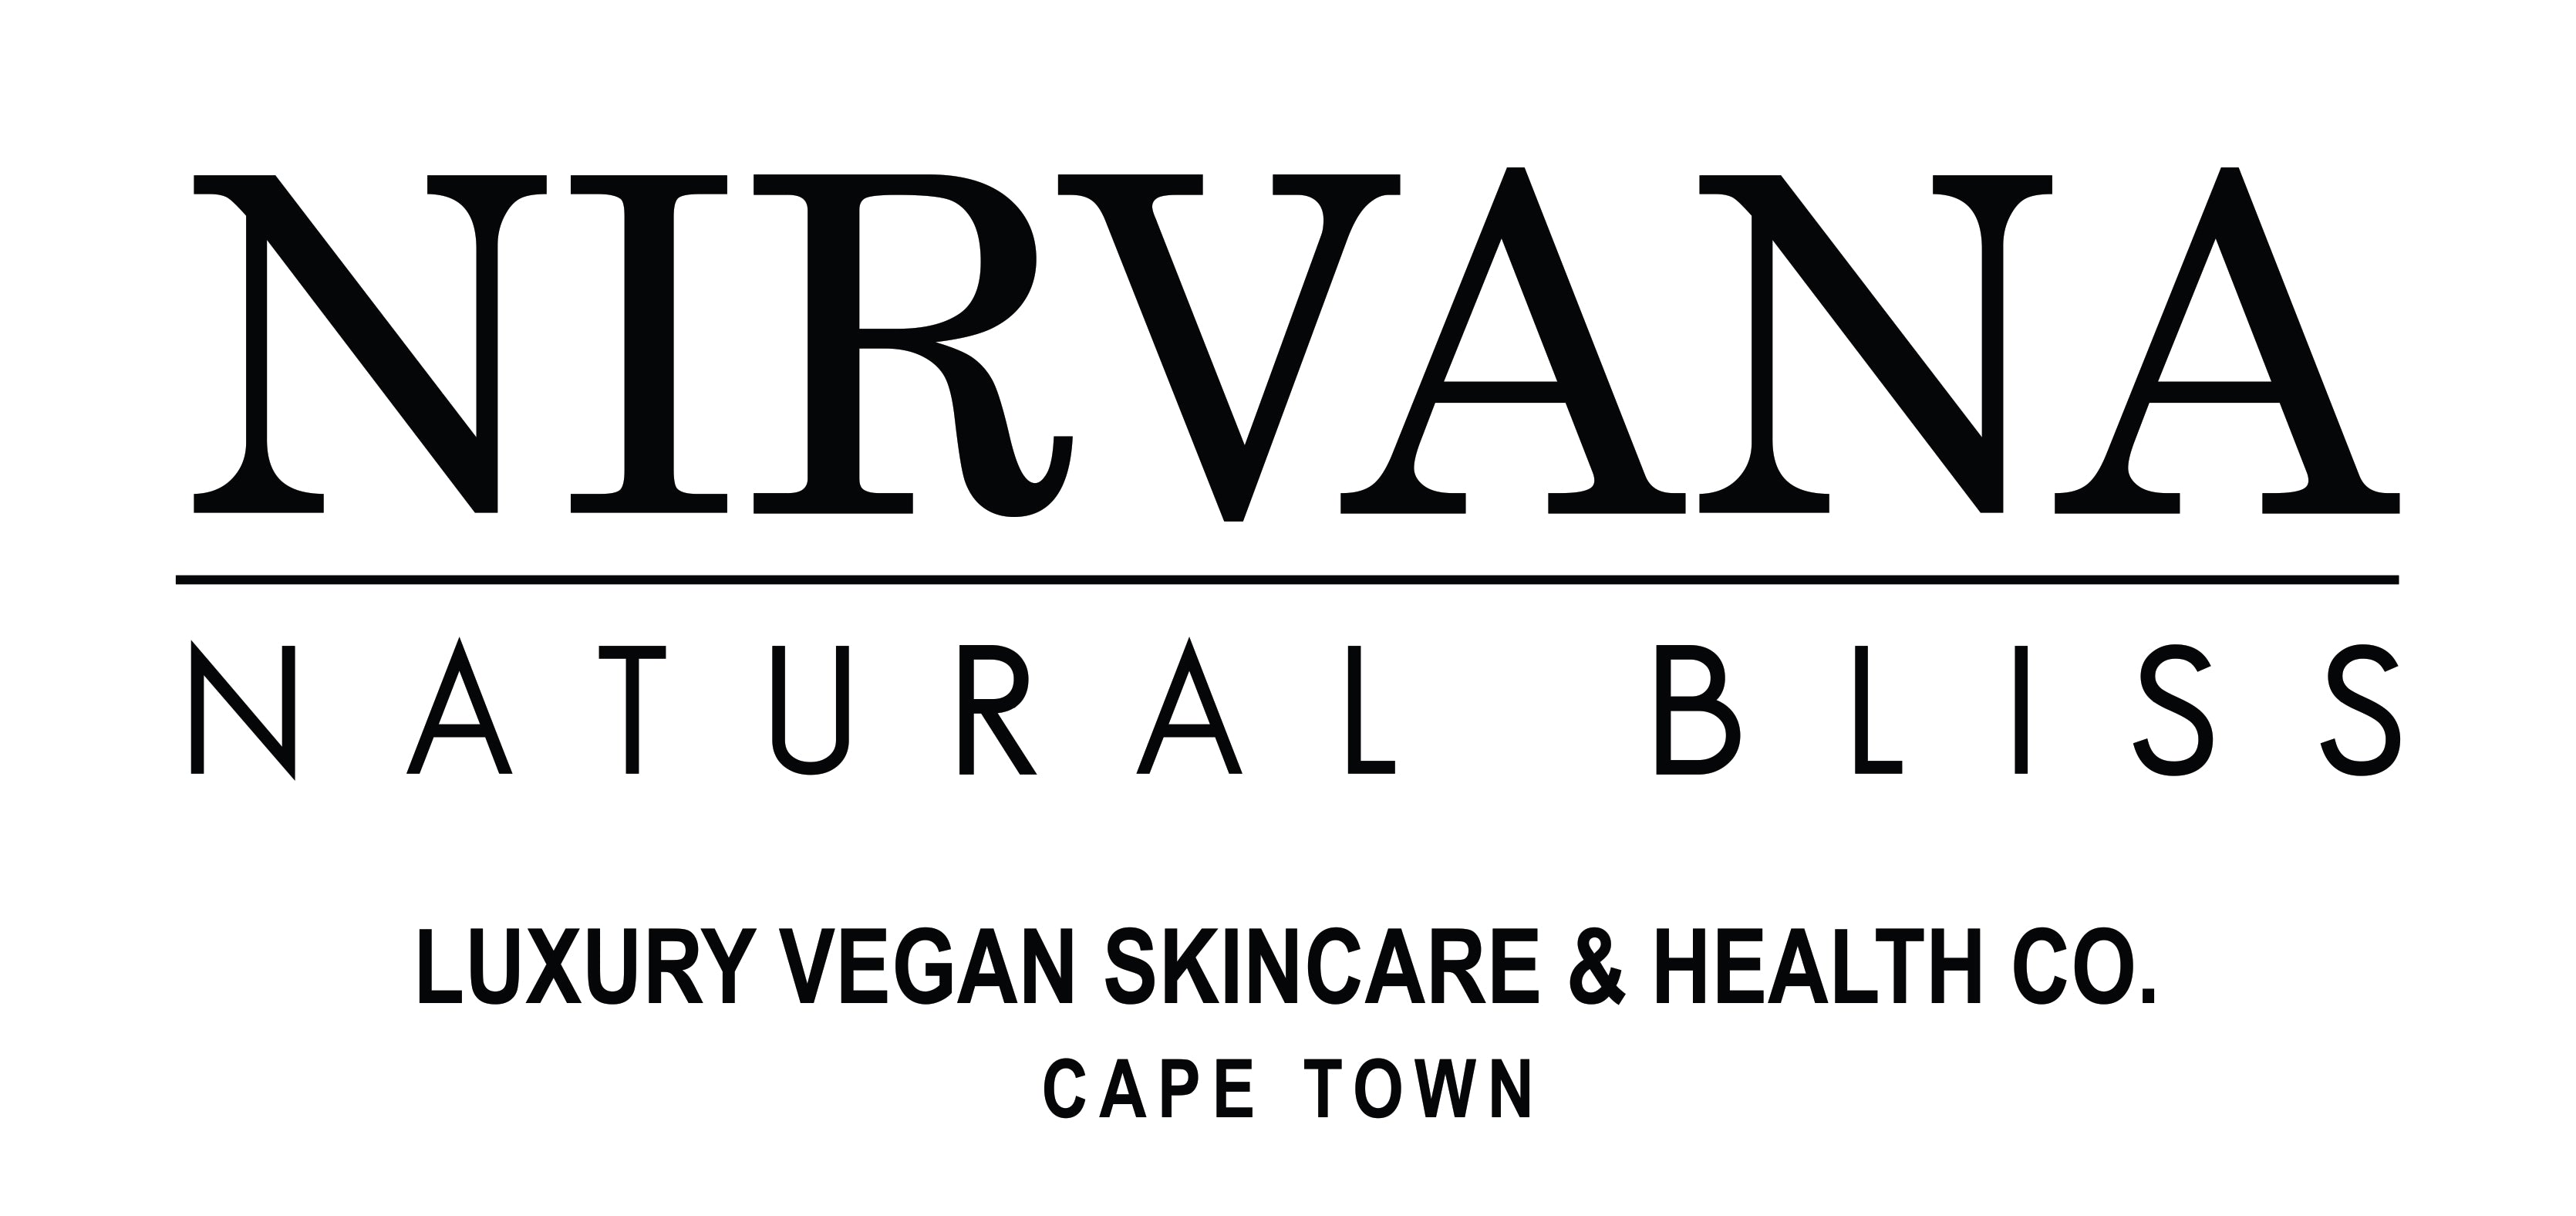 Nirvana Natural Bliss Luxury Vegan Skincare & Health Co.                                                                                                                                                                       Cape Town